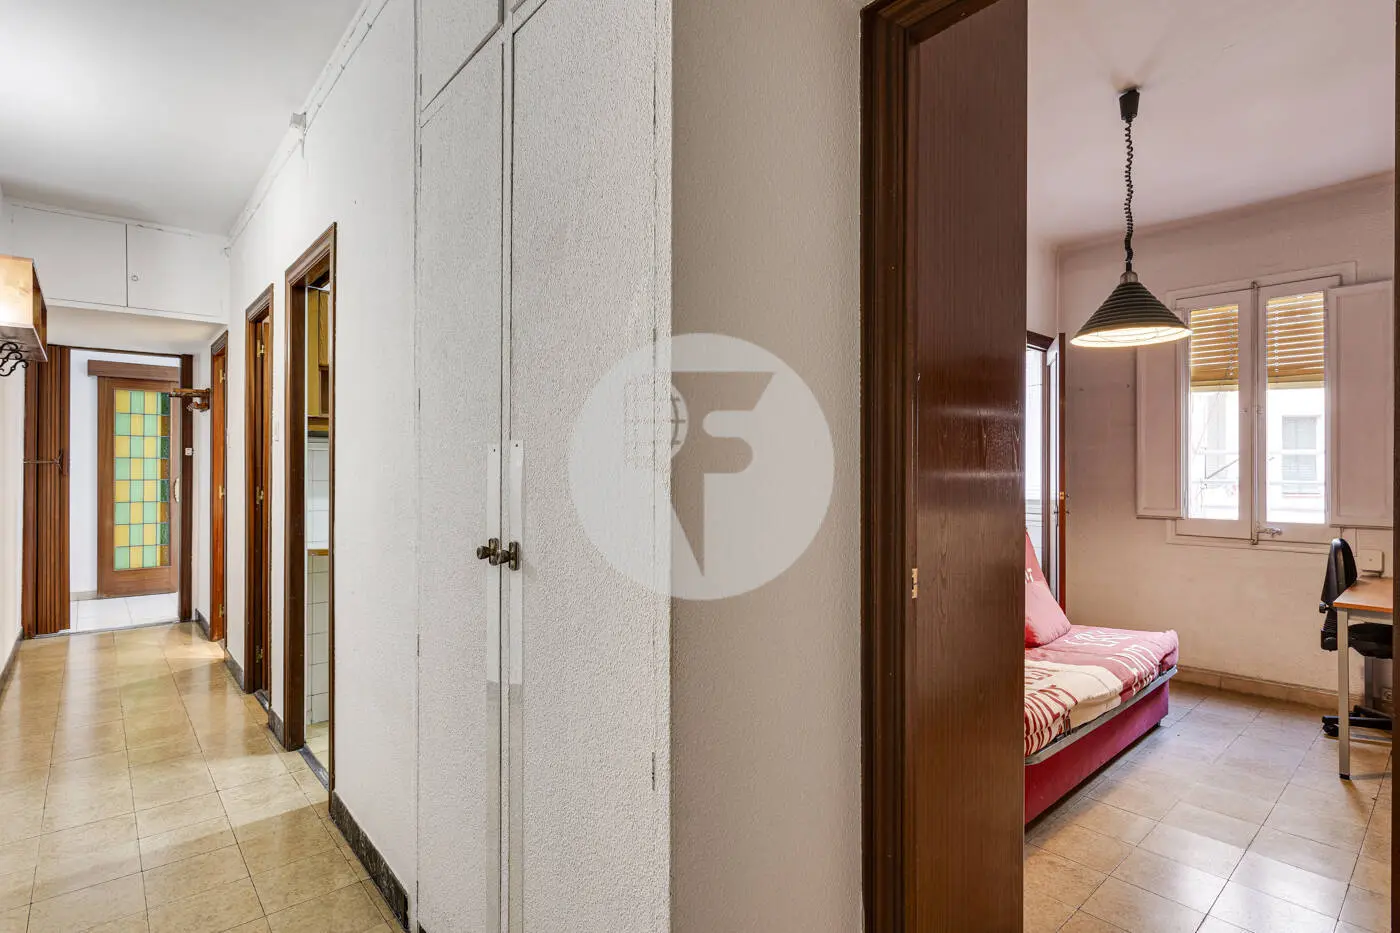 3-bedroom apartment located in the Nova Esquerra de l'Eixample neighborhood of Barcelona. 22